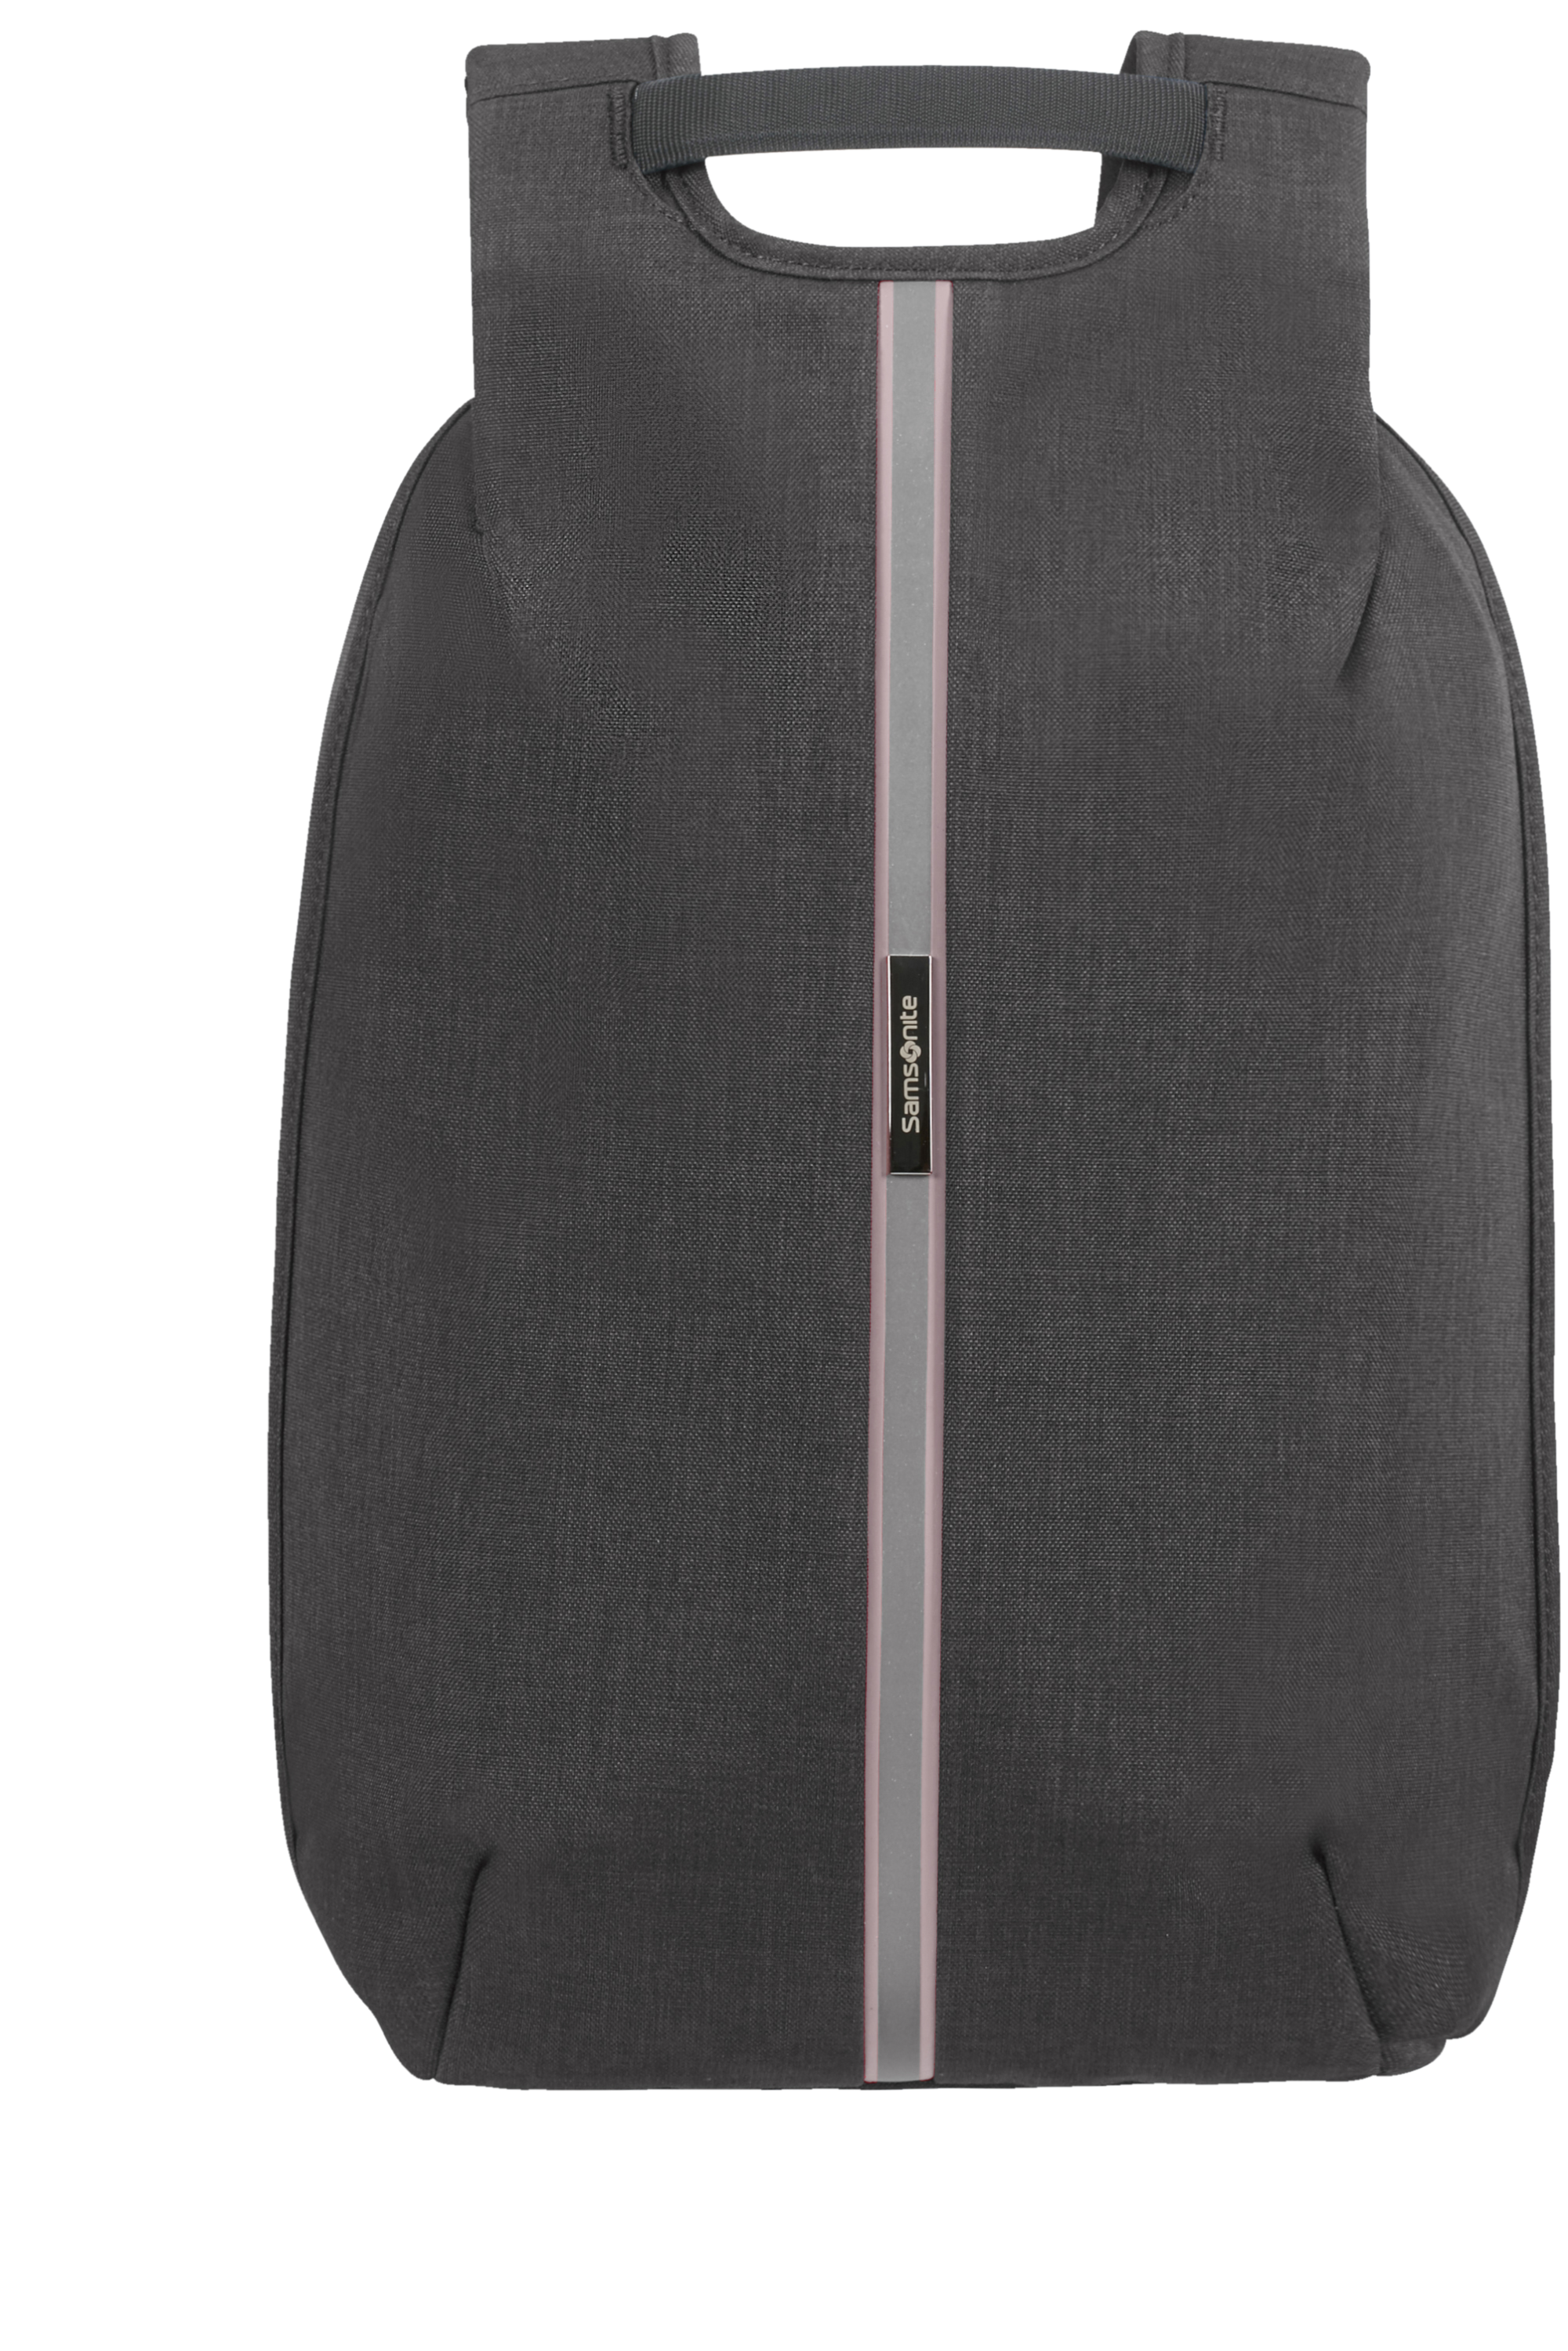 Samsonite Laptop backpack 144758 / KJ8006 - best prices